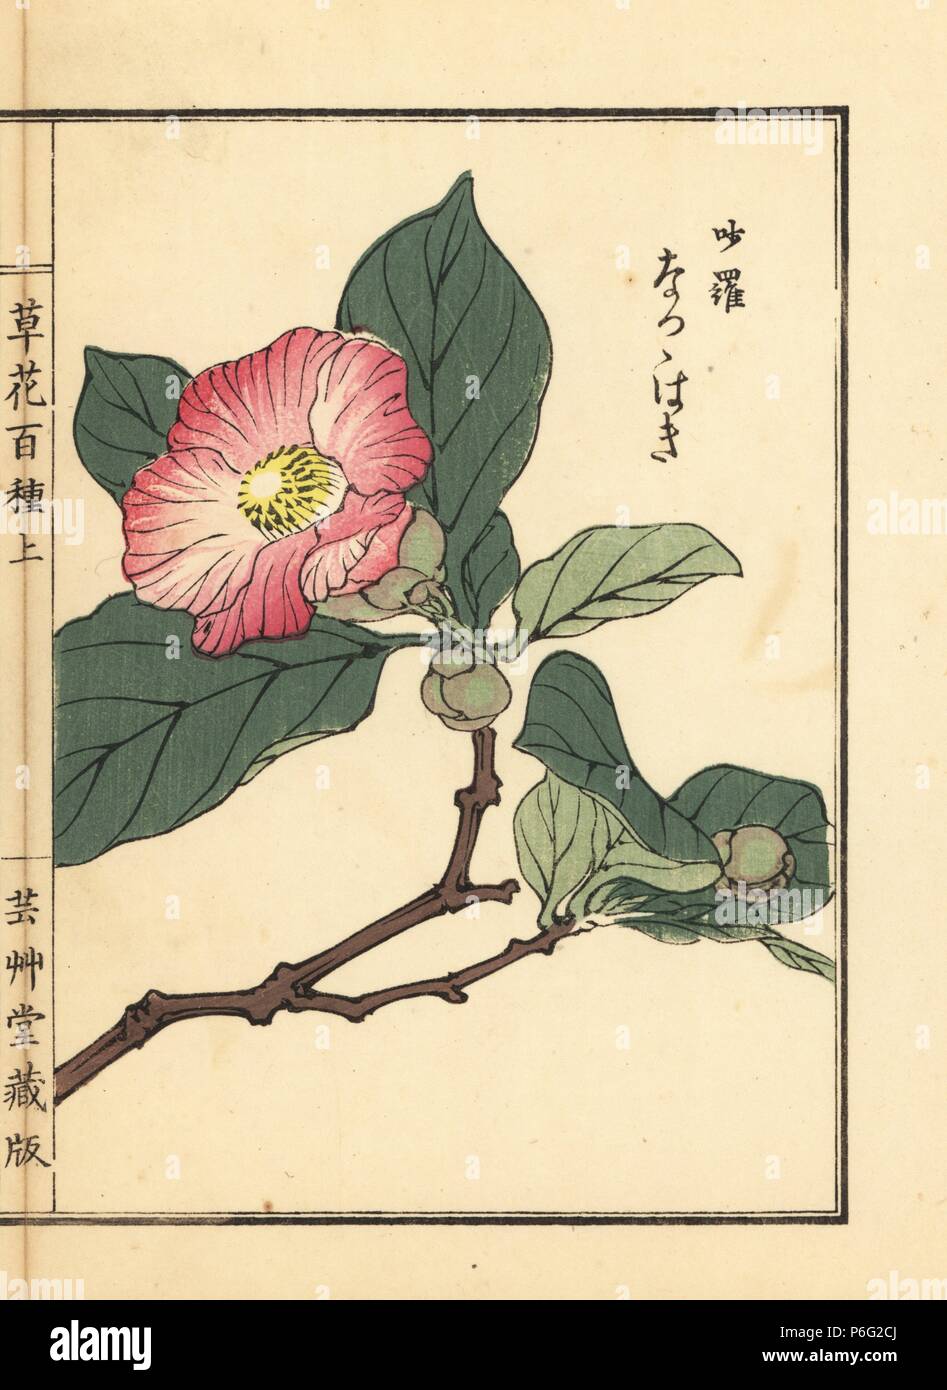 Natsu tsubaki or Japanese stewartia, Stewartia pseudocamellia. Handcoloured woodblock print by Kono Bairei from Kusa Bana Hyakushu (One Hundred Varieties of Flowers), Tokyo, Yamada, 1901. Stock Photo